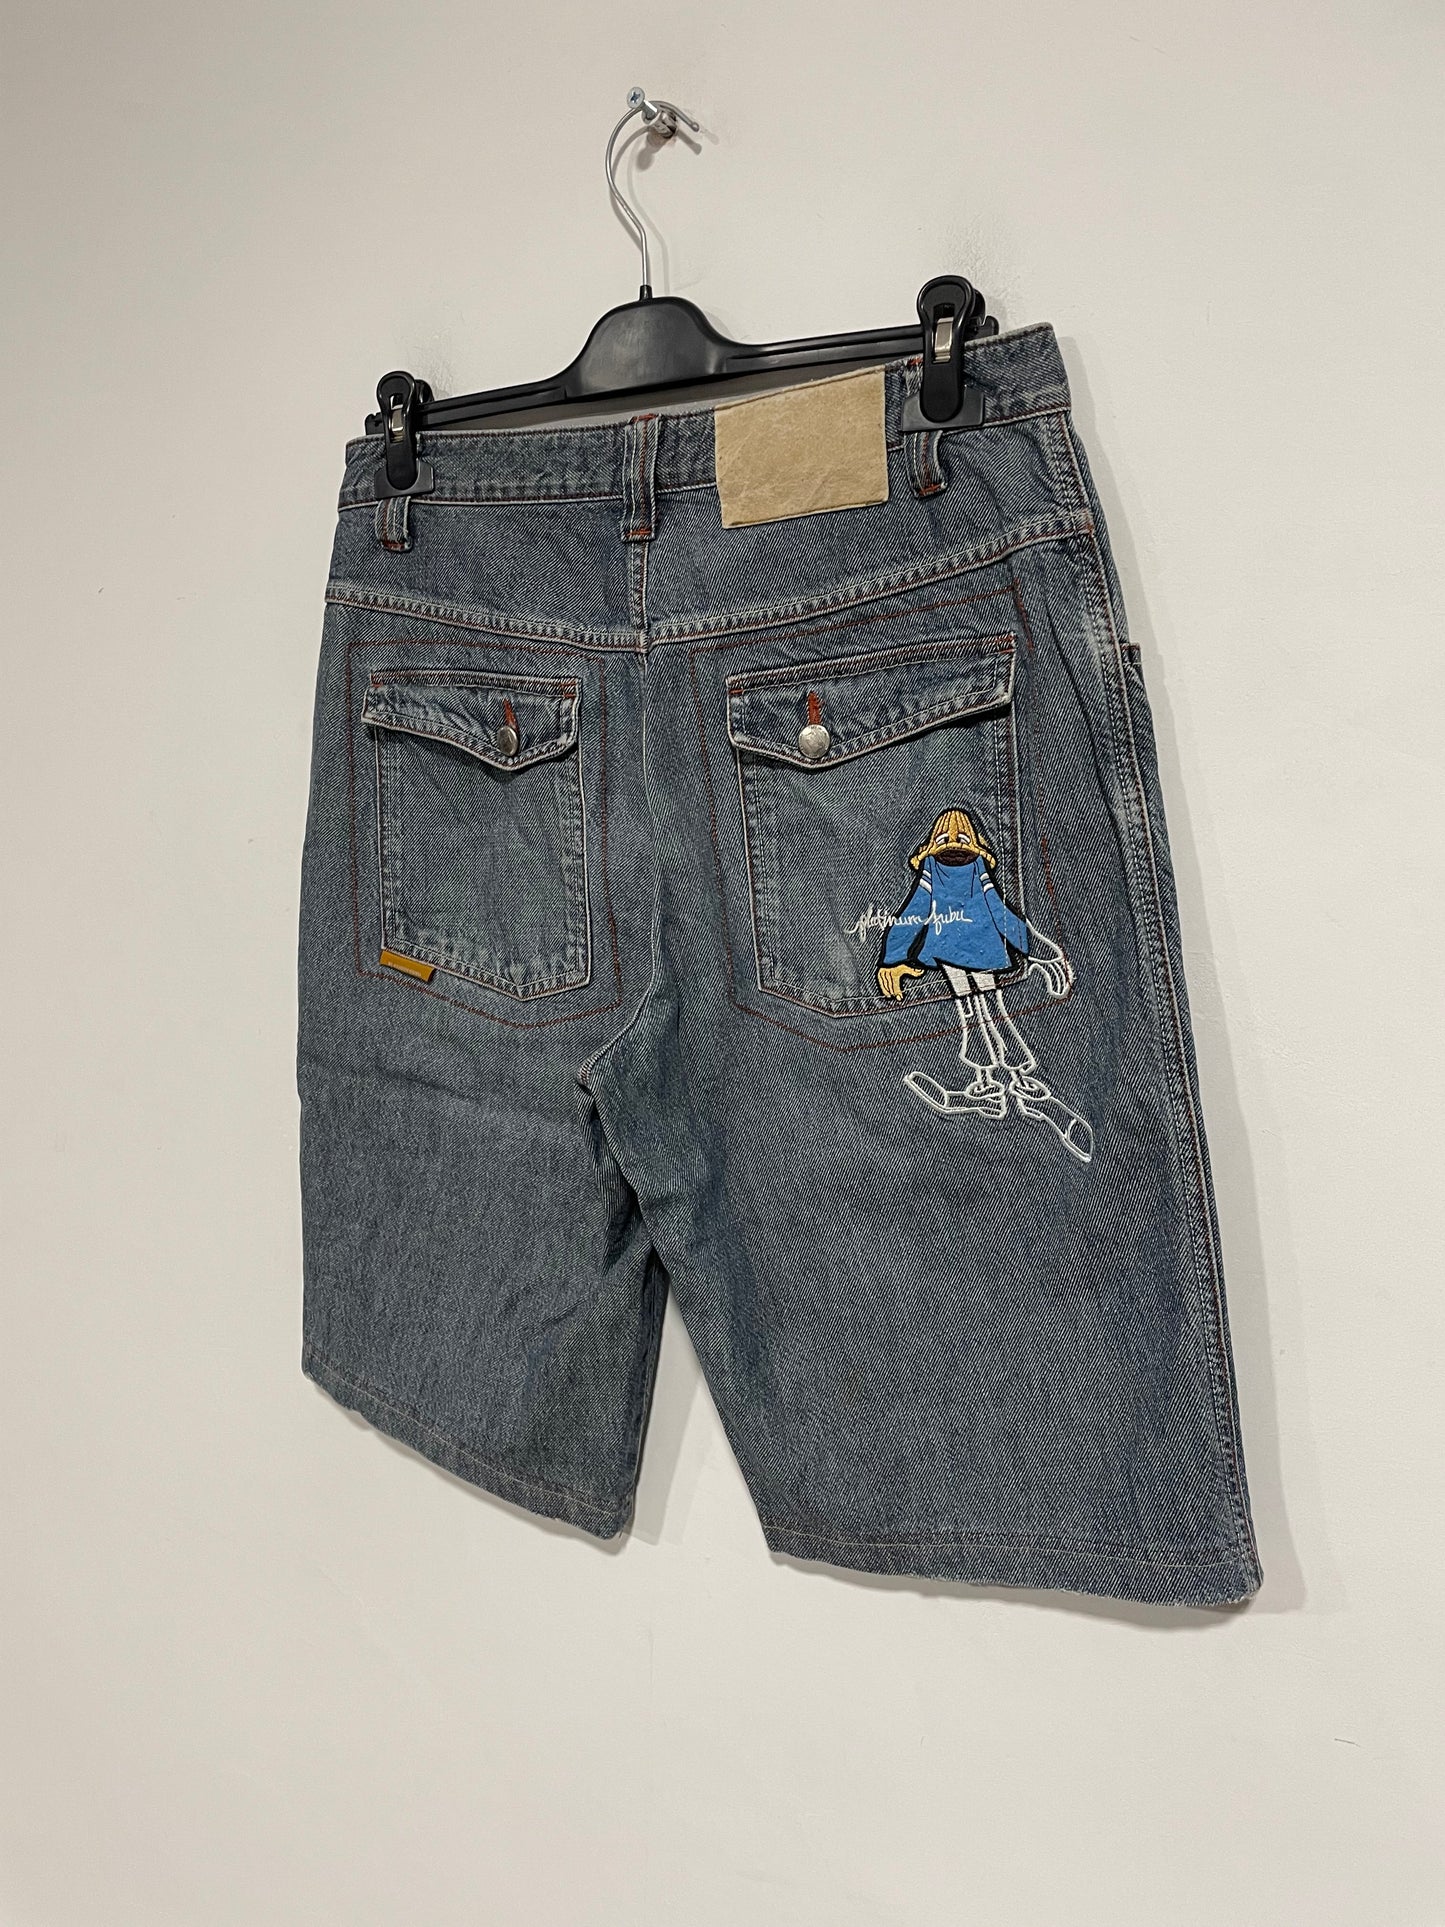 Rarissimo shorts baggy Fubu anni 90 (D504)